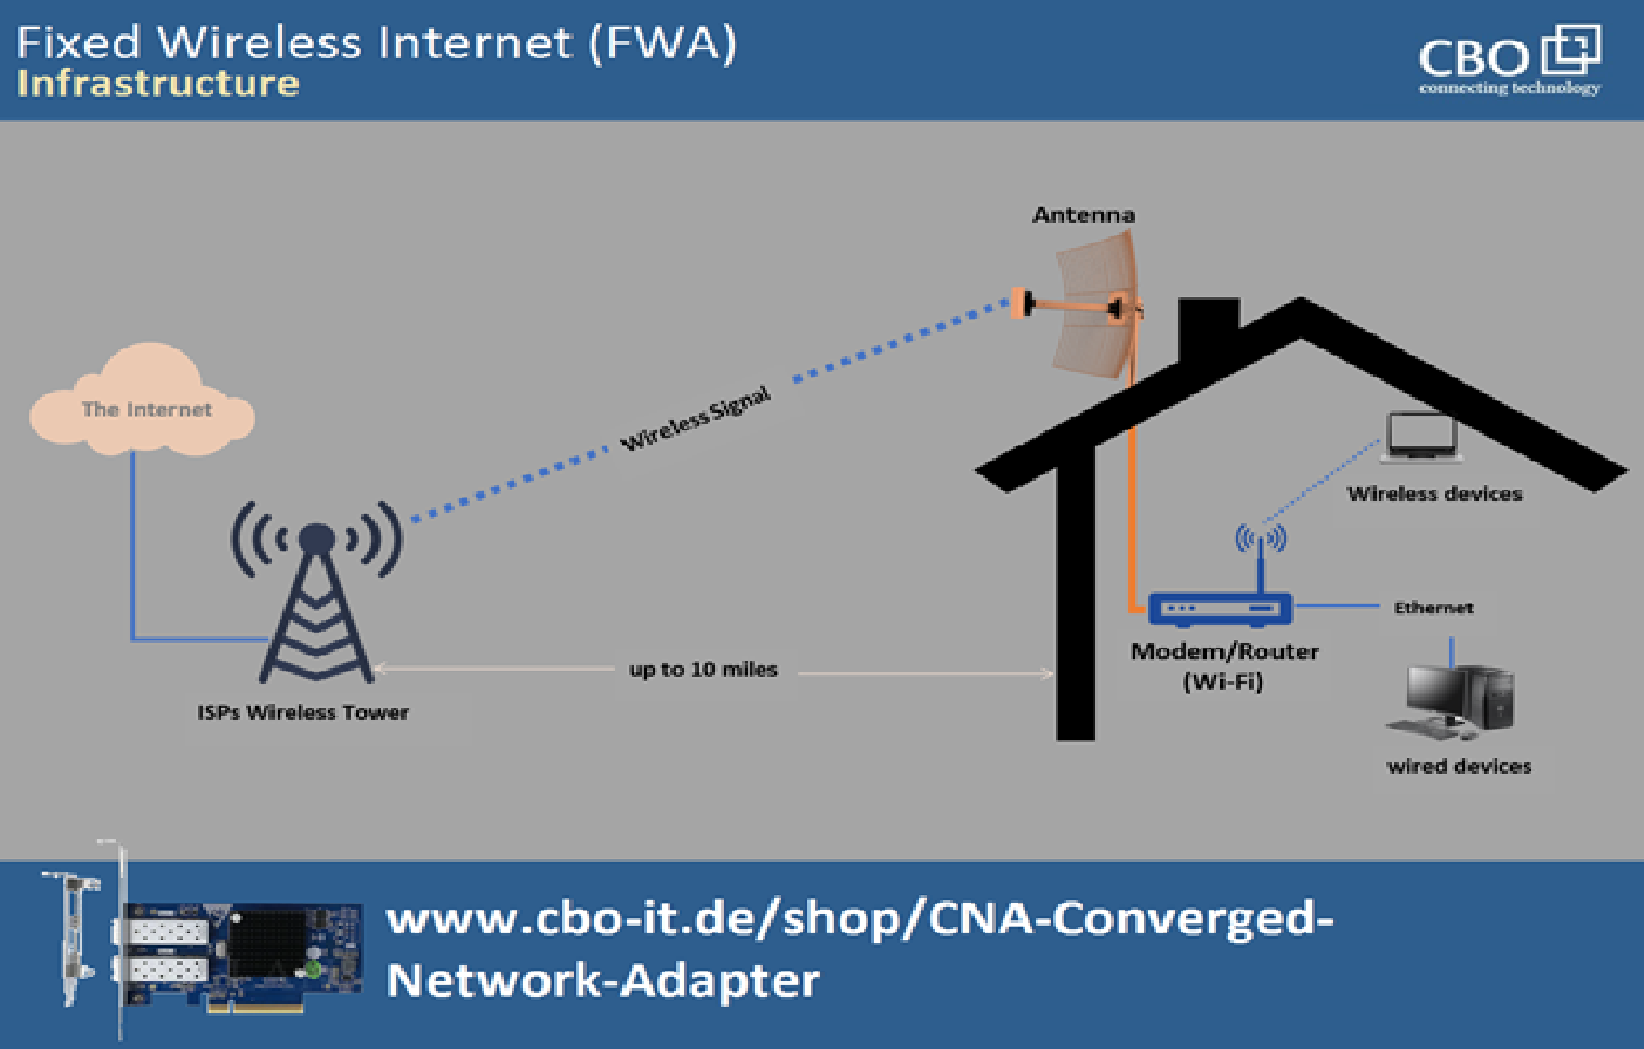 Fixed Wireless Internet - Infrastructure